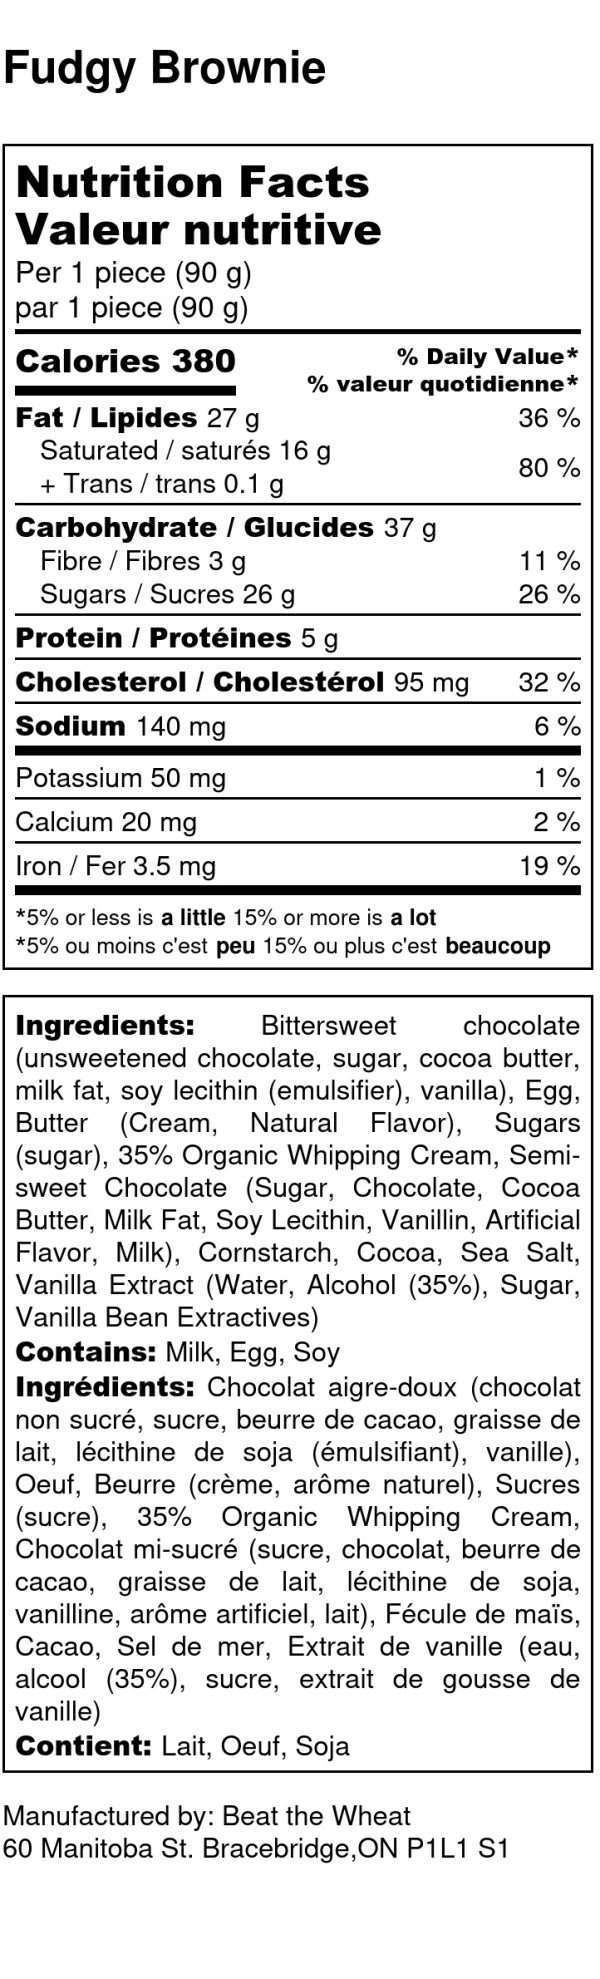 Fudgy Brownie - Nutrition Label